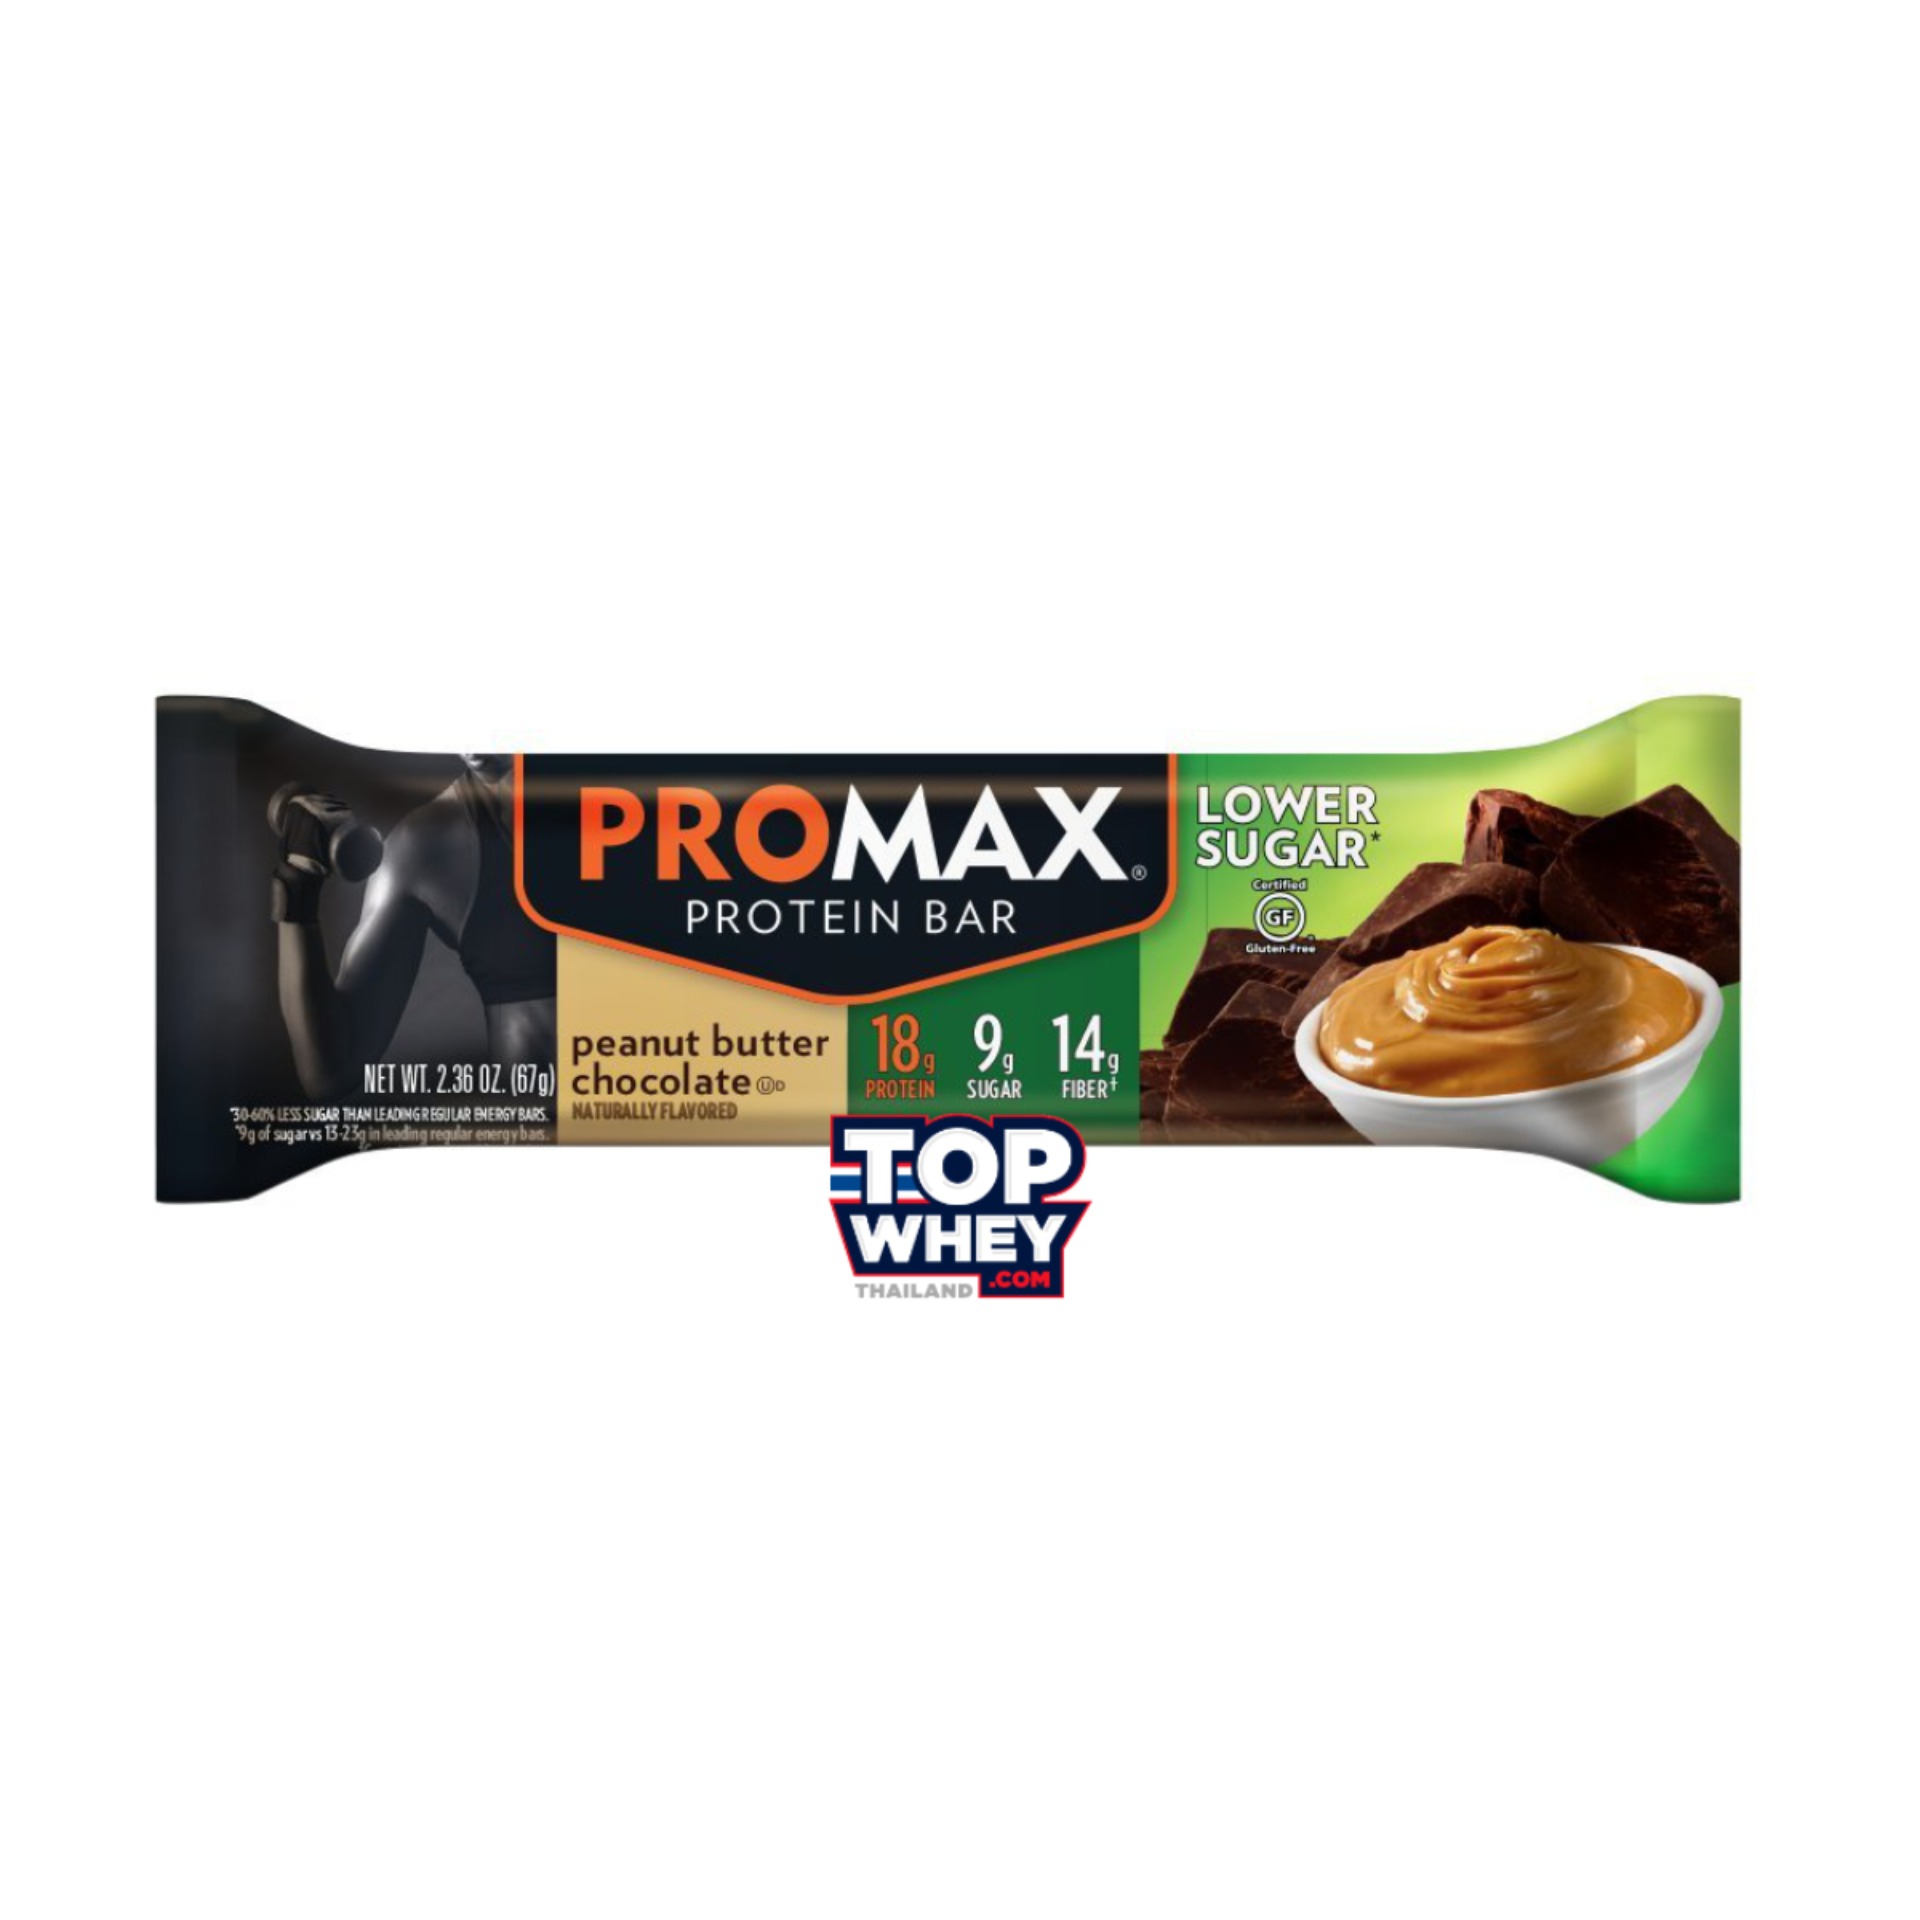 Promax Low Sugar Protein Bars - 1 Bar Peanut Butter Chocolate  โปรตีนบาร์  มีส่วนผสมของเวย์โปรตีน  มีปริมาณน้ำตาลที่ต่ำ  สามารถทานเล่น หรือแทนมื้ออาหารได้  มีปริมาณของโปรตีนที่สูง